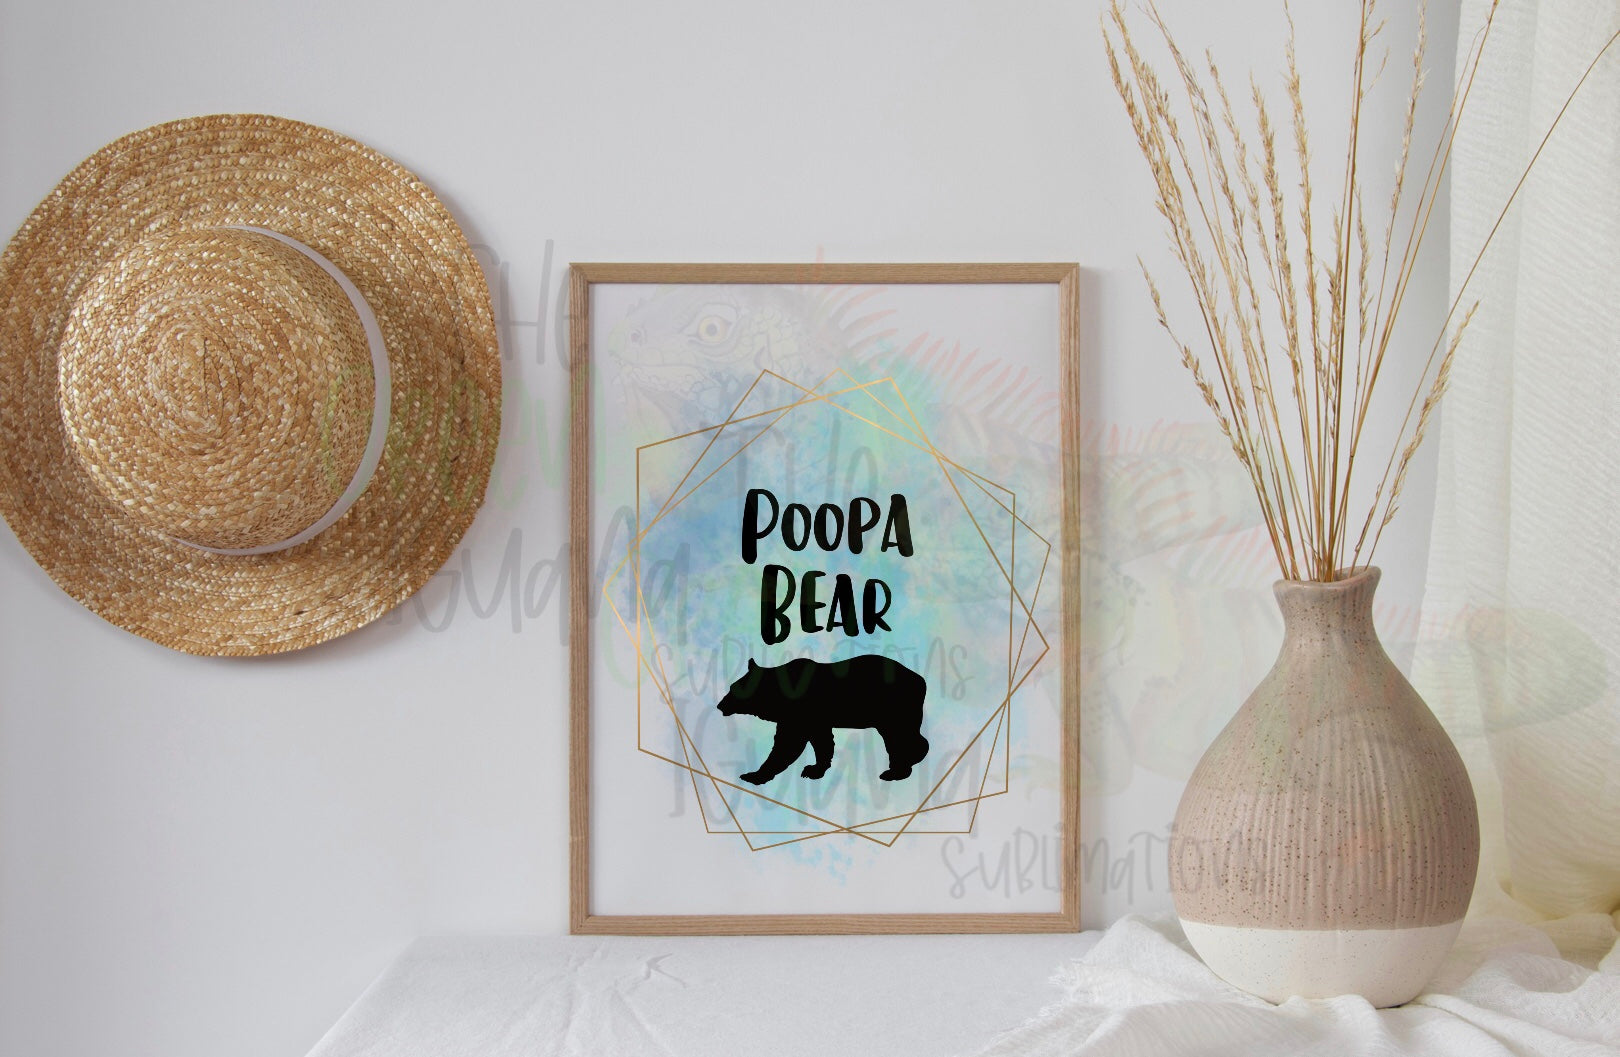 Poopa Bear